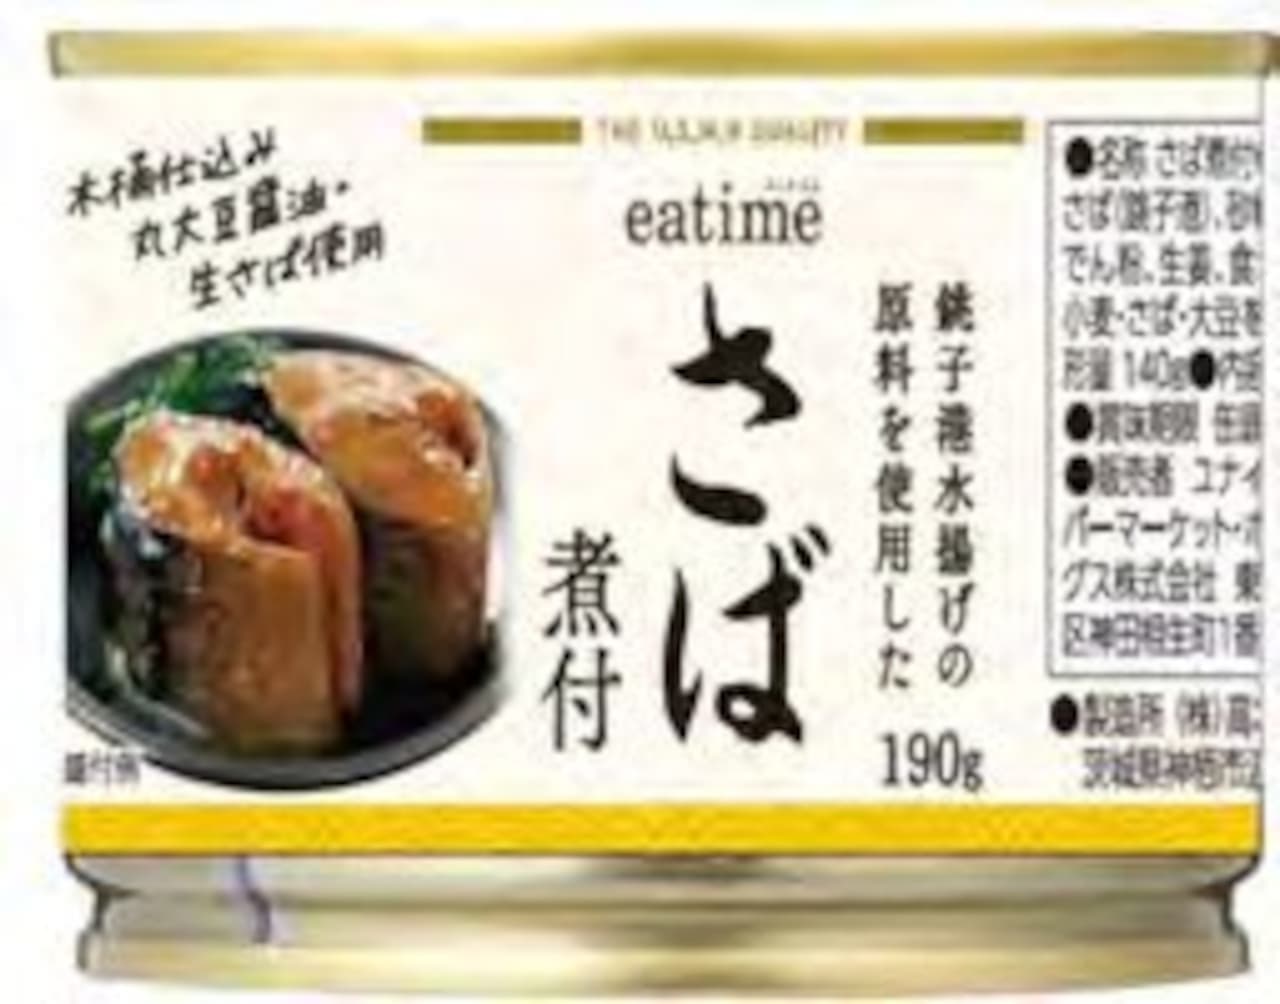 E-time "simmered mackerel"